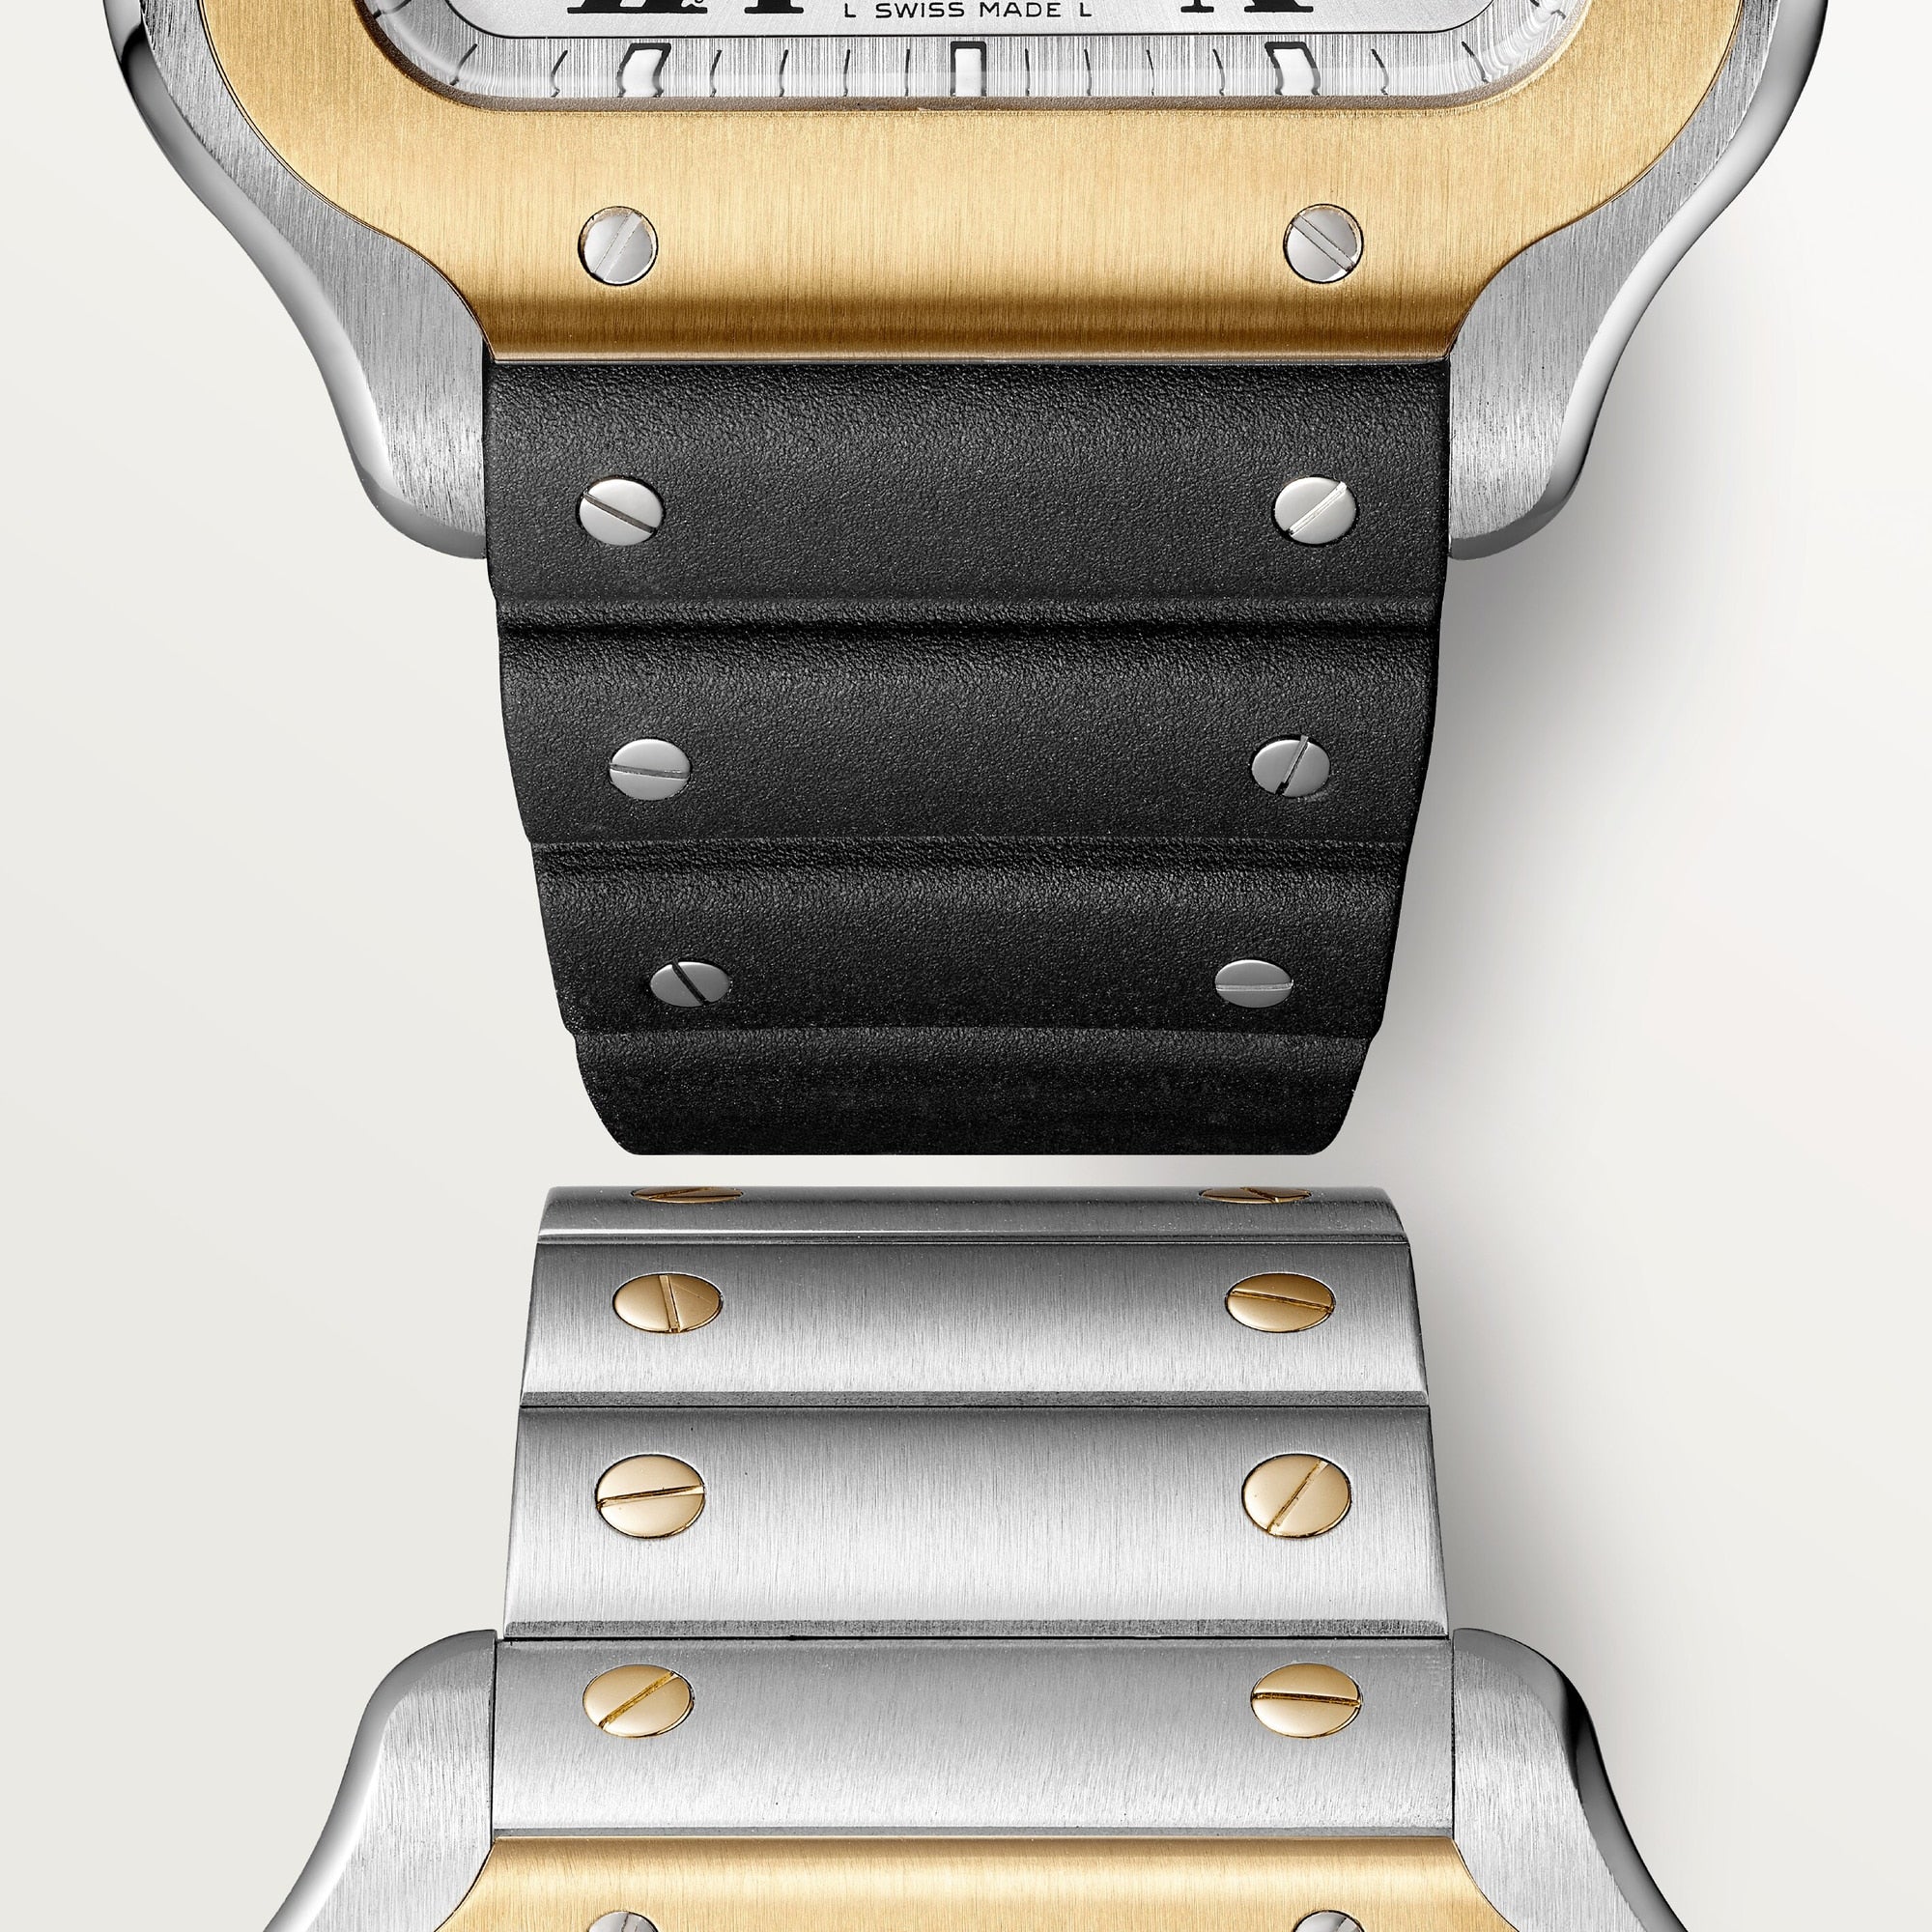 Cartier Santos Chronograph Stainless Steel & 18K Yellow Gold Men's Watch